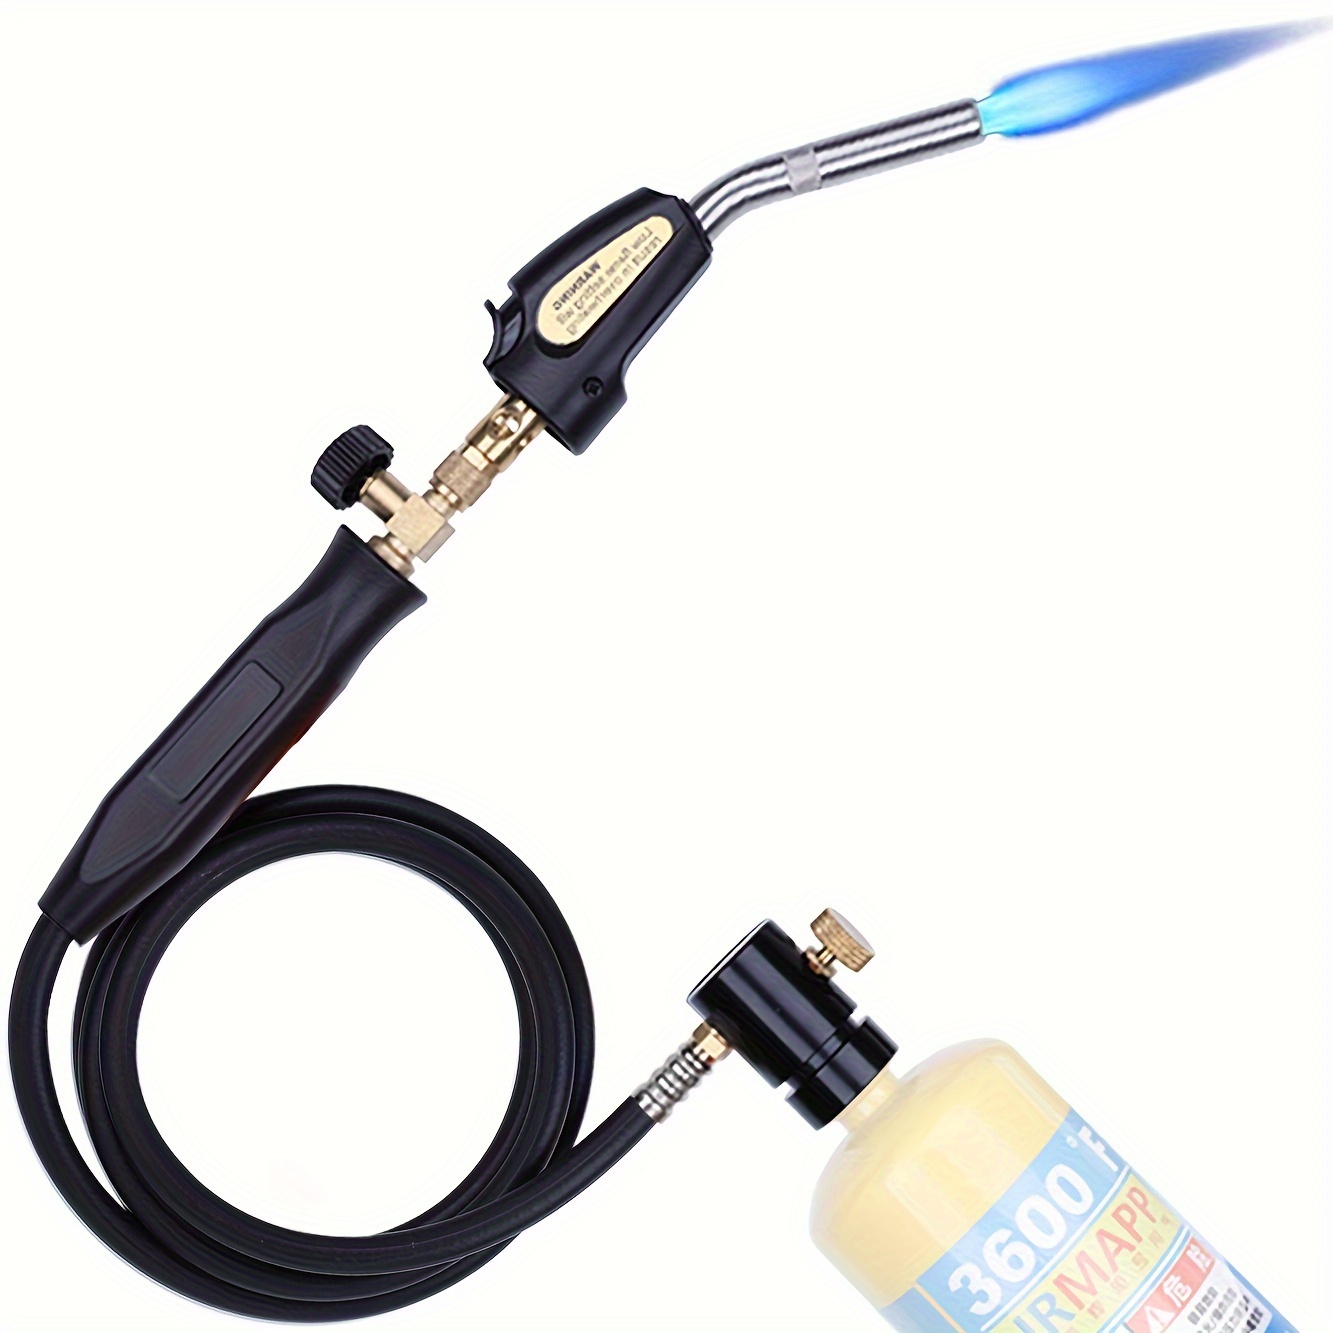 

1pc Propane Spray Light Kit With Hose 3.6ft, Map/map Gas Spray Light Trigger Starter, Adjustable Flame Knob Near Spray Head Stainless Steel, Gift For Welding Brazing Plumber Diyer